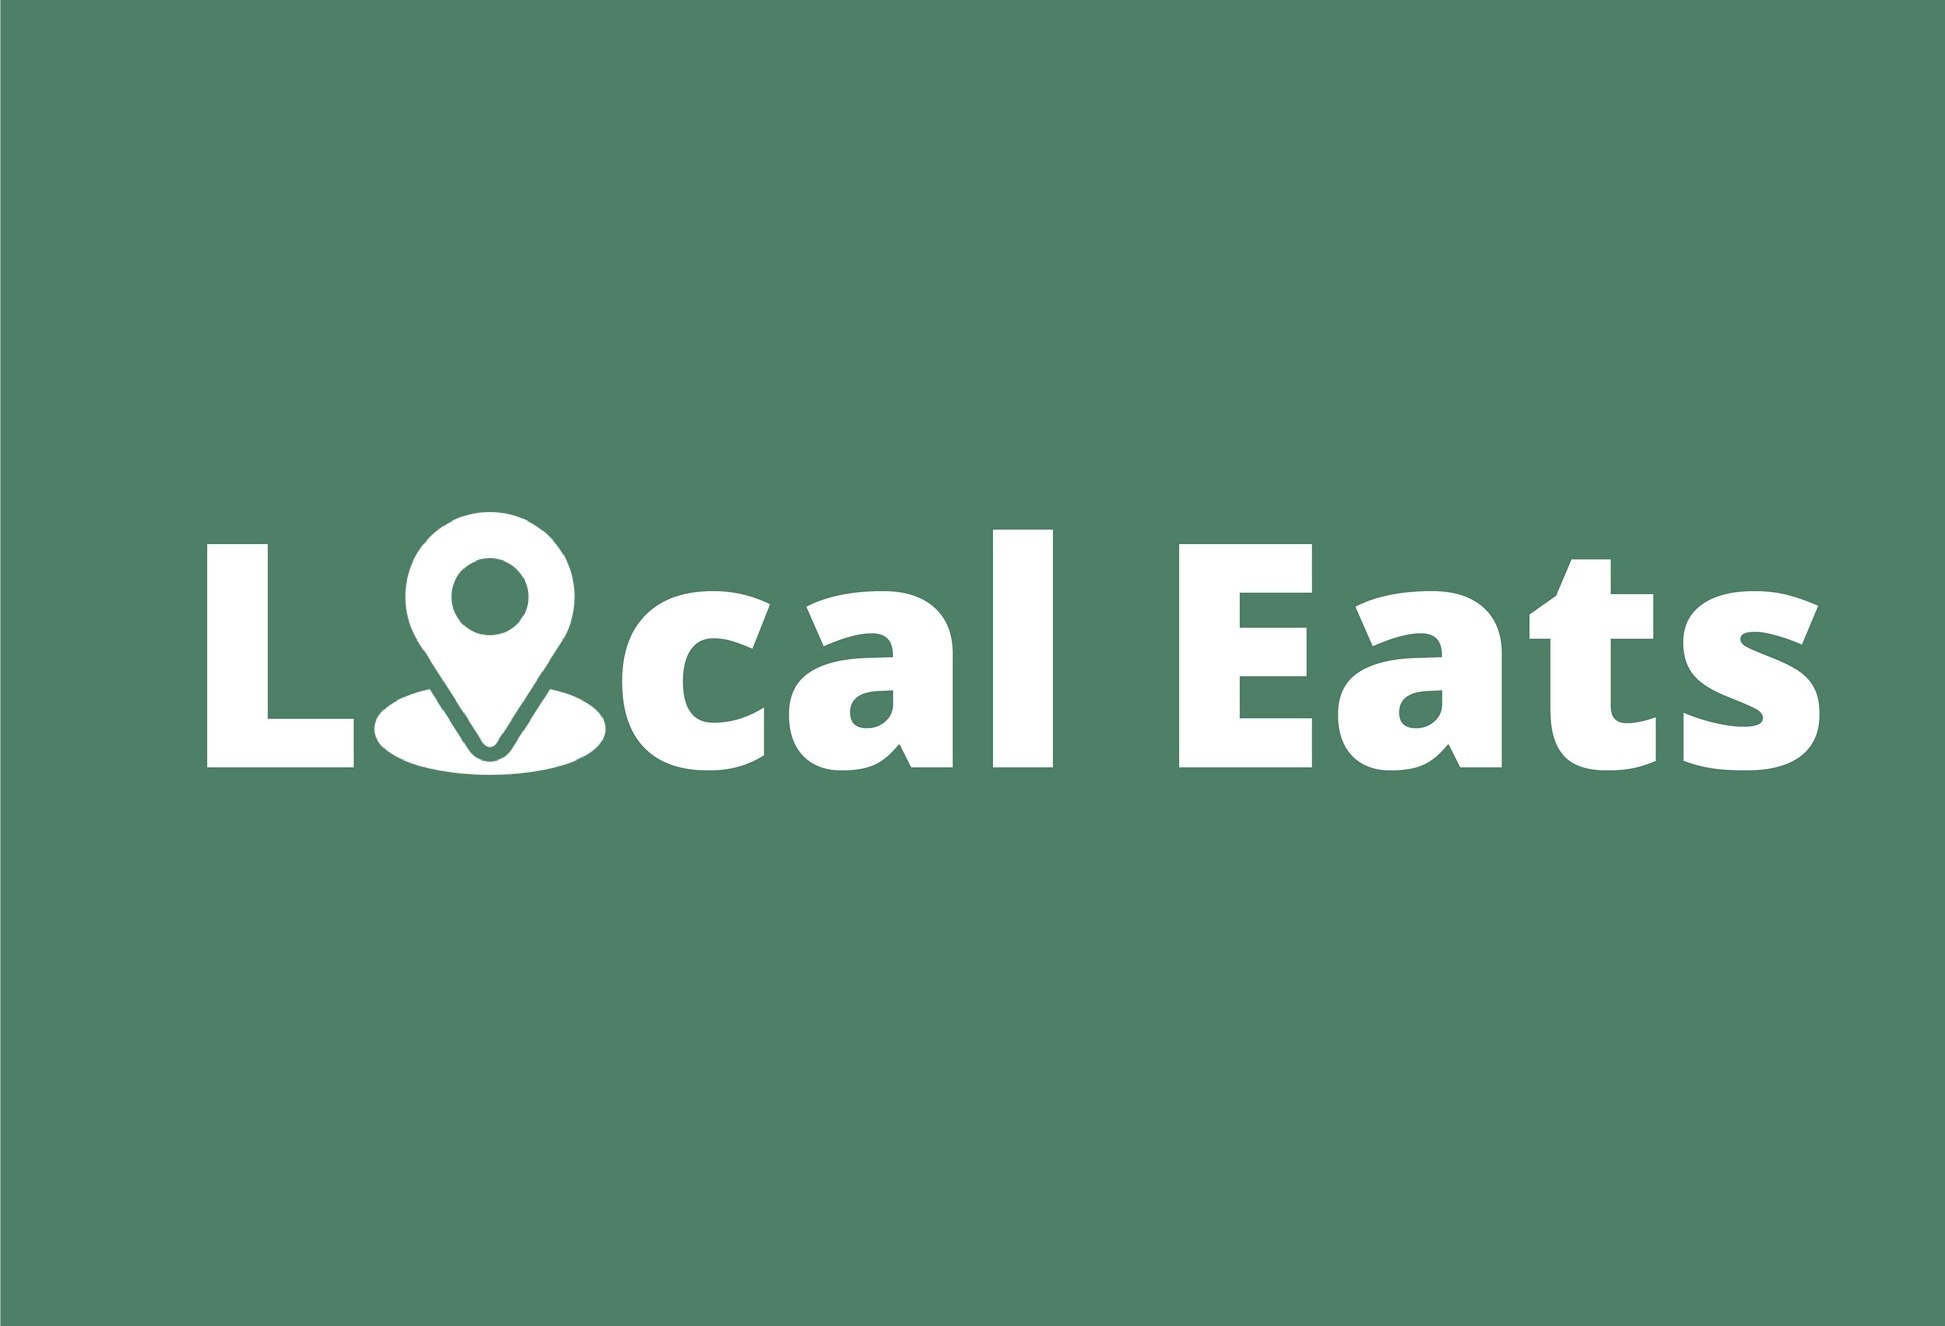 Local Eats